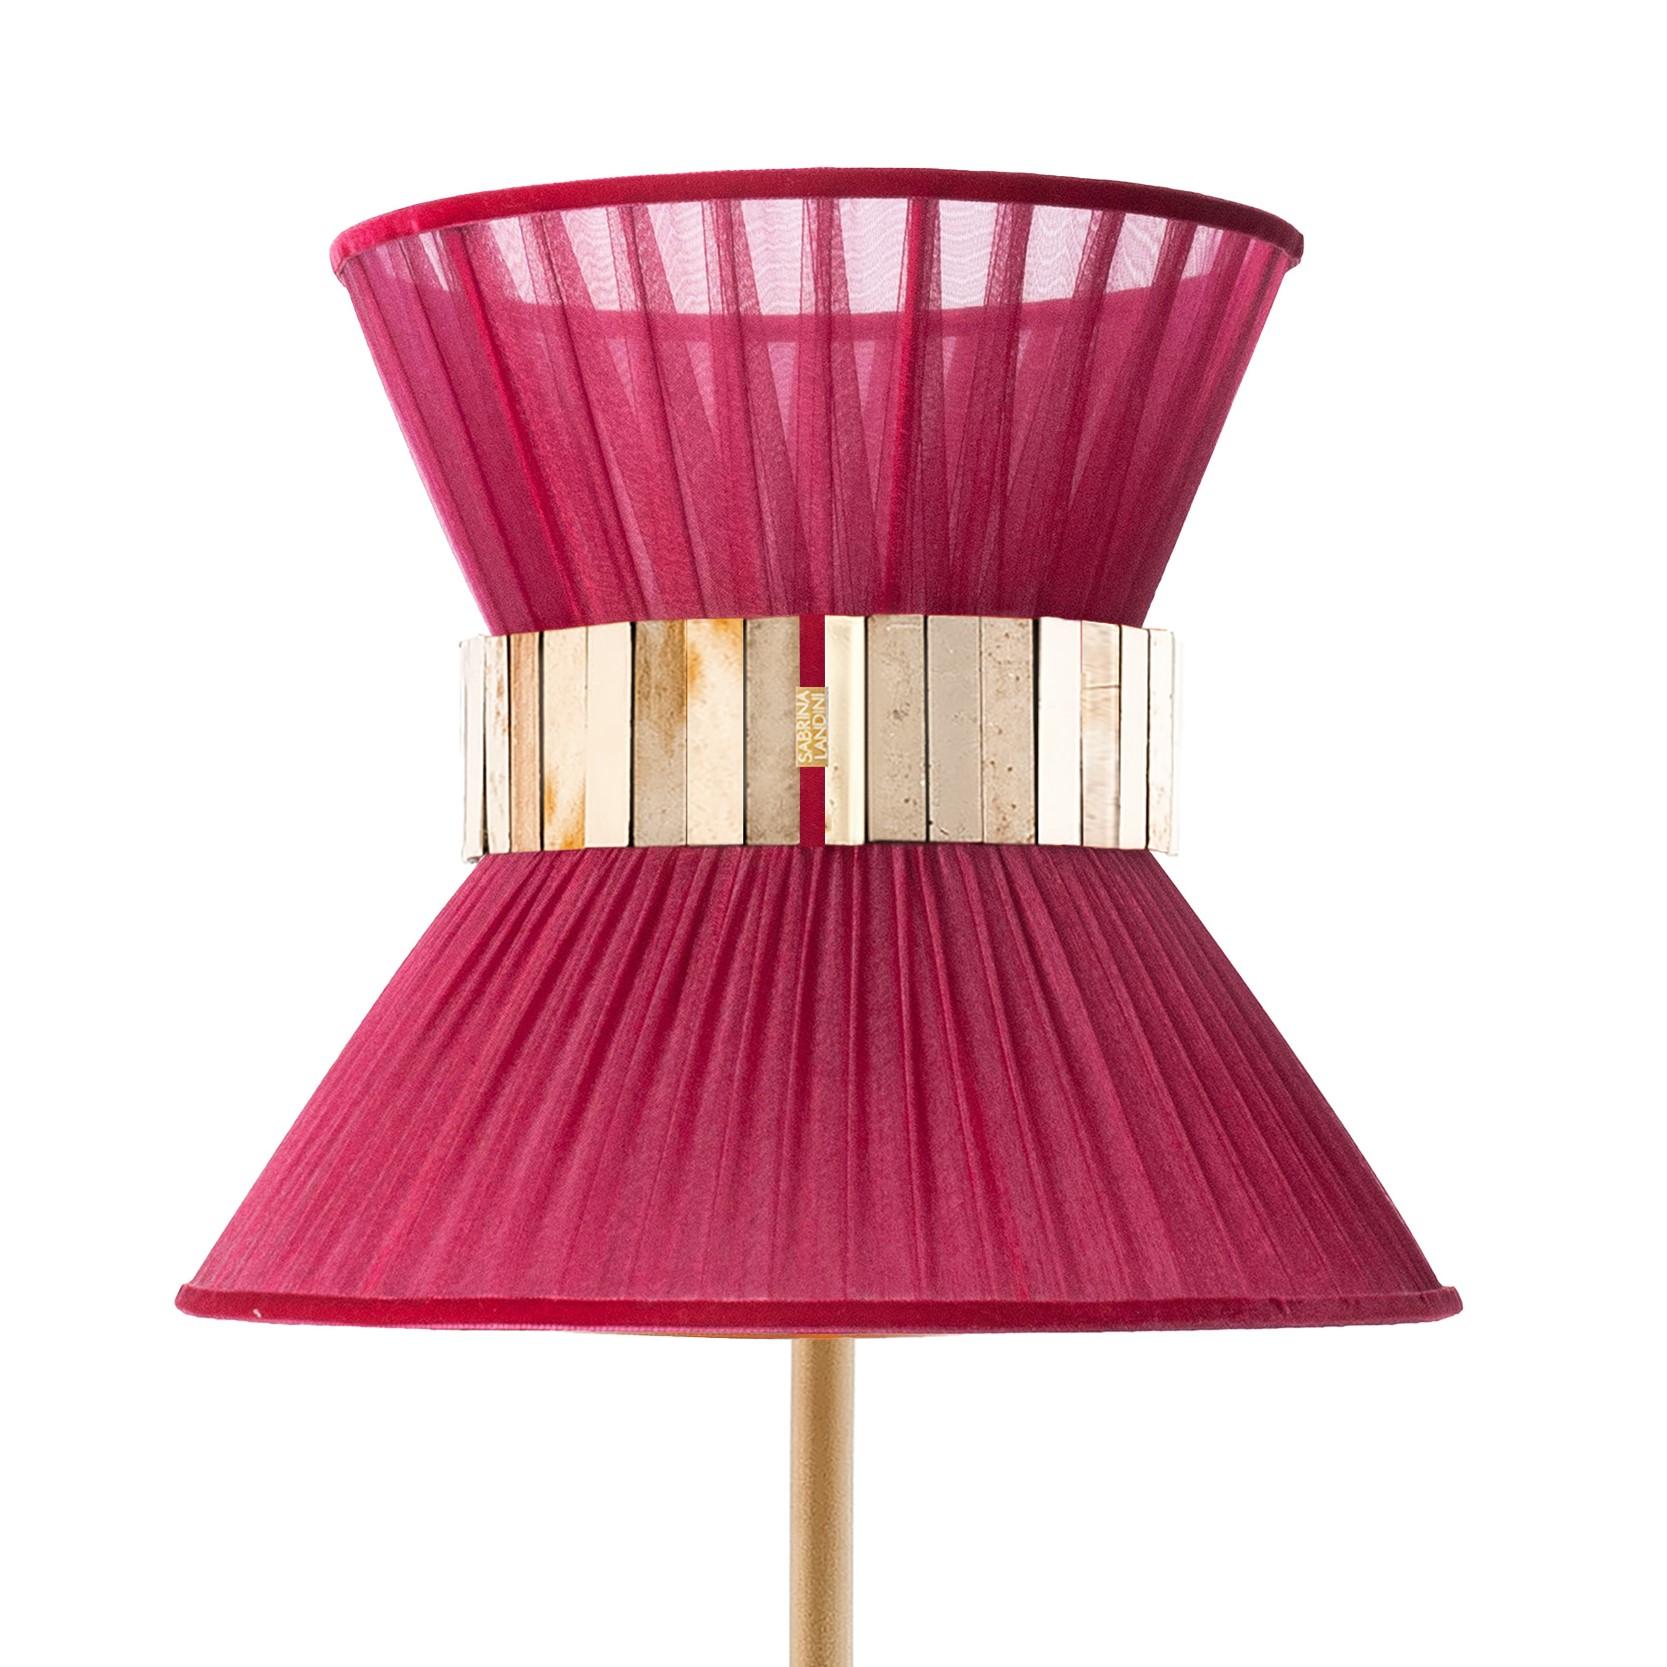 TIFFANY la lampe emblématique !

Tiffany, lampe intemporelle, inspirée du film international 